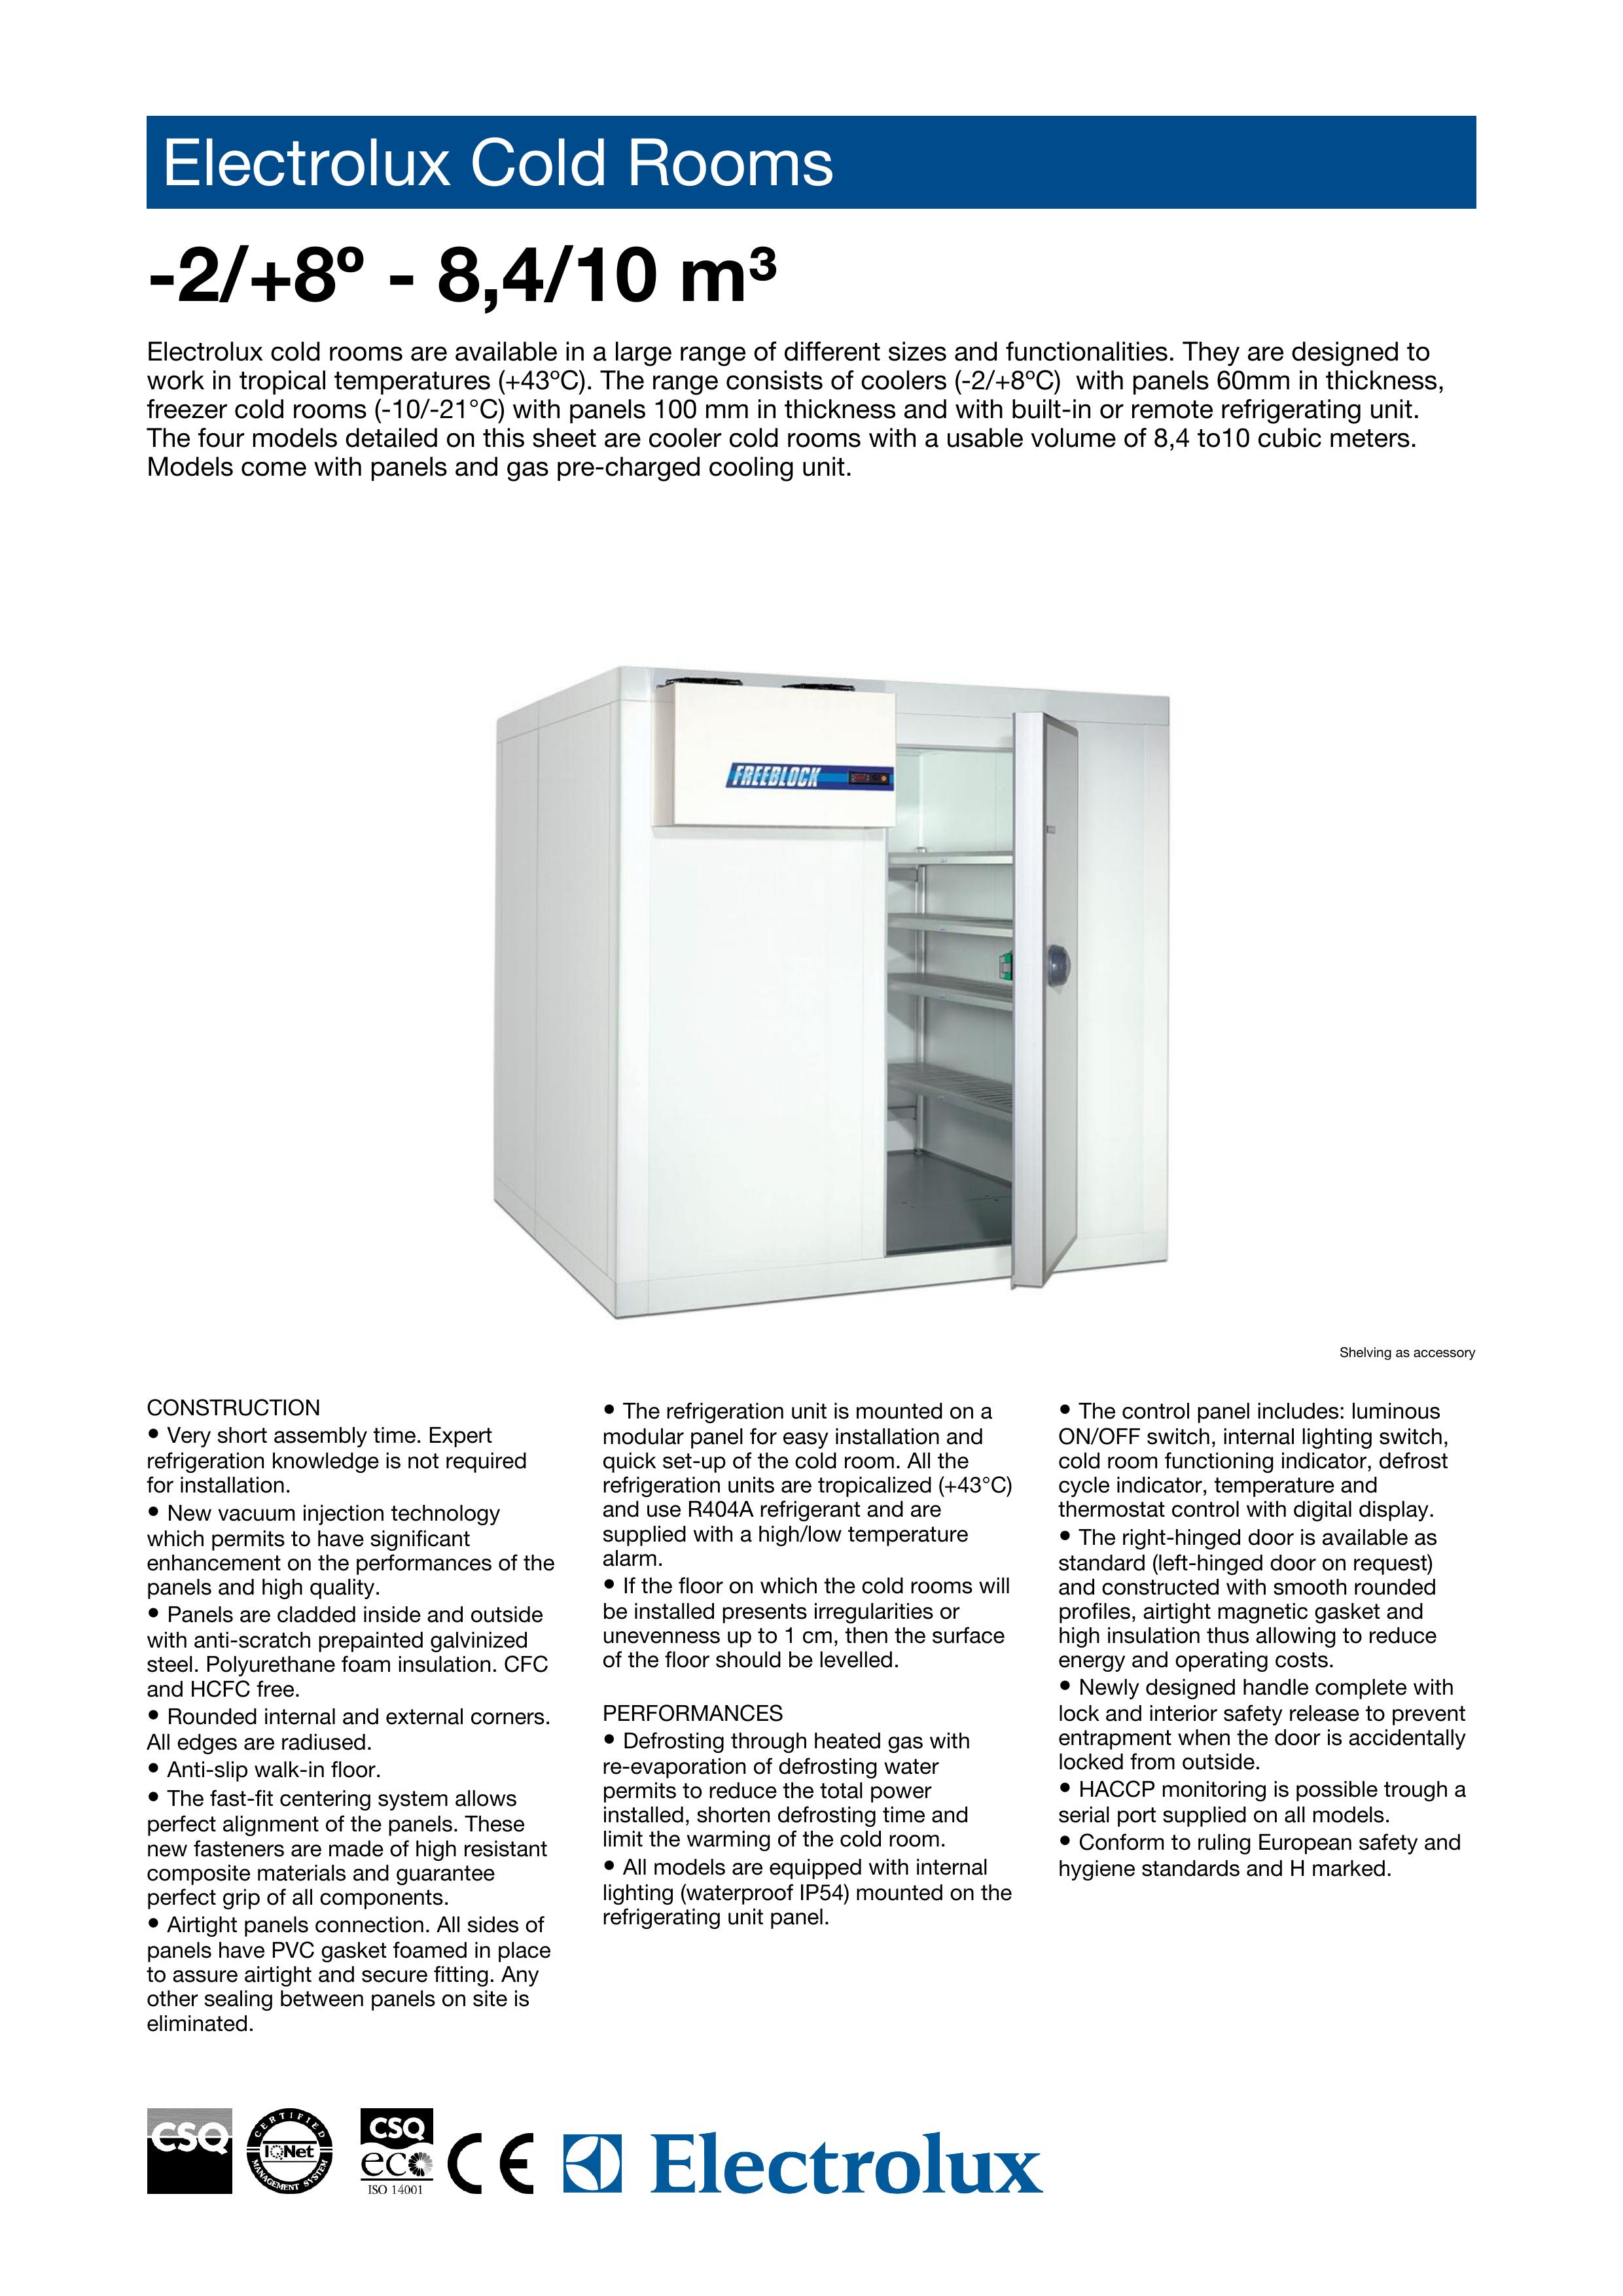 Electrolux 102219 Refrigerator User Manual